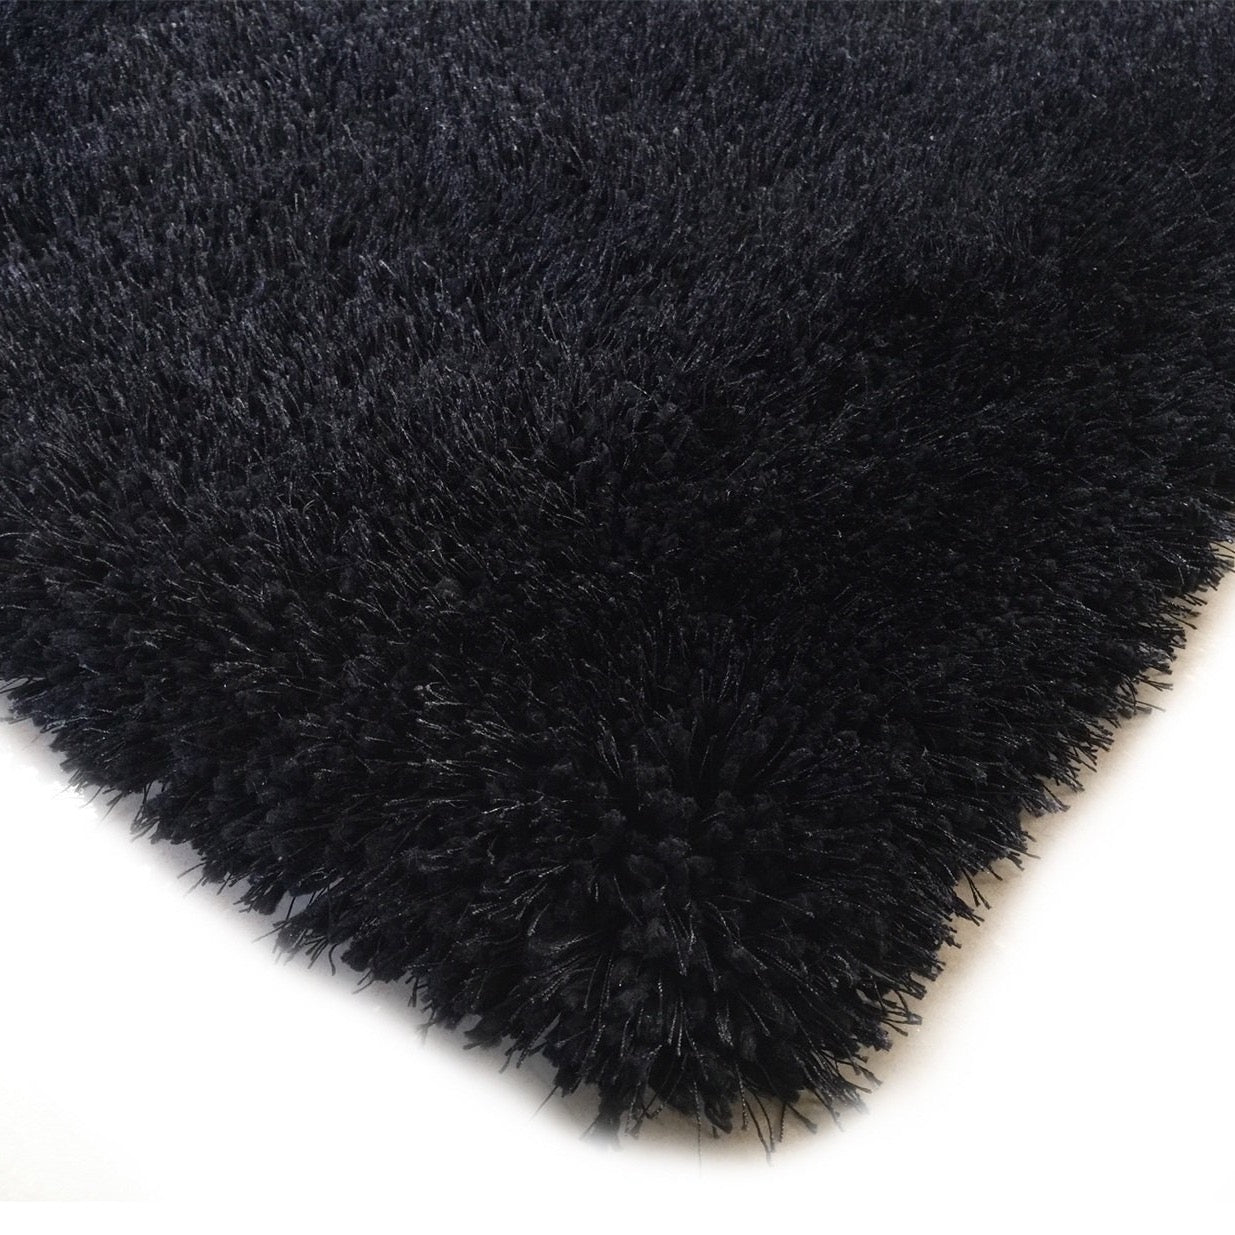 Plush Fluffy Shinny Multi Textural Black Shag Area Rug/Carpet